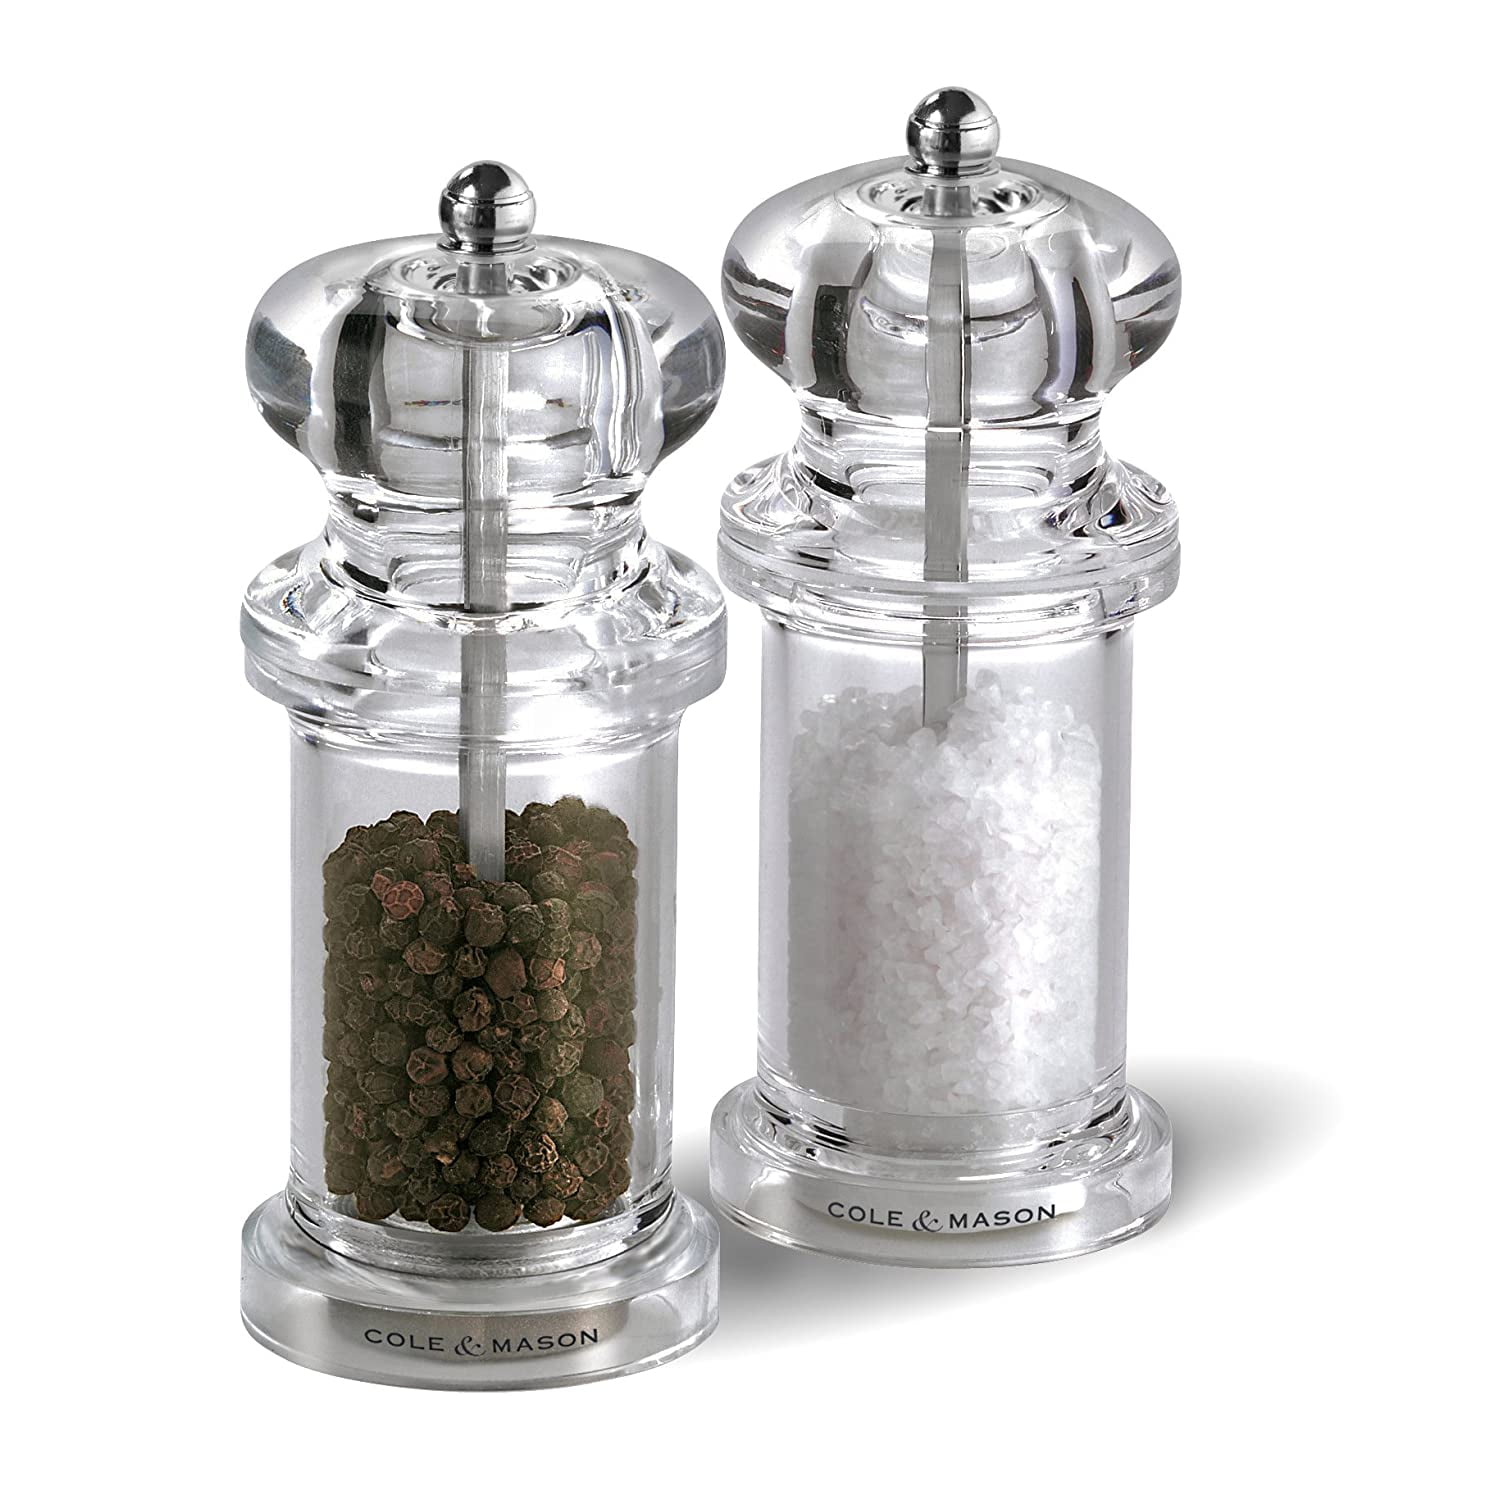 COLE  MASON 505 Salt and Pepper Grinder Set - Clear Acrylic Mills Includes  Precision Mechanisms and Premium Sea Salt and Peppercorns - Walmart.com